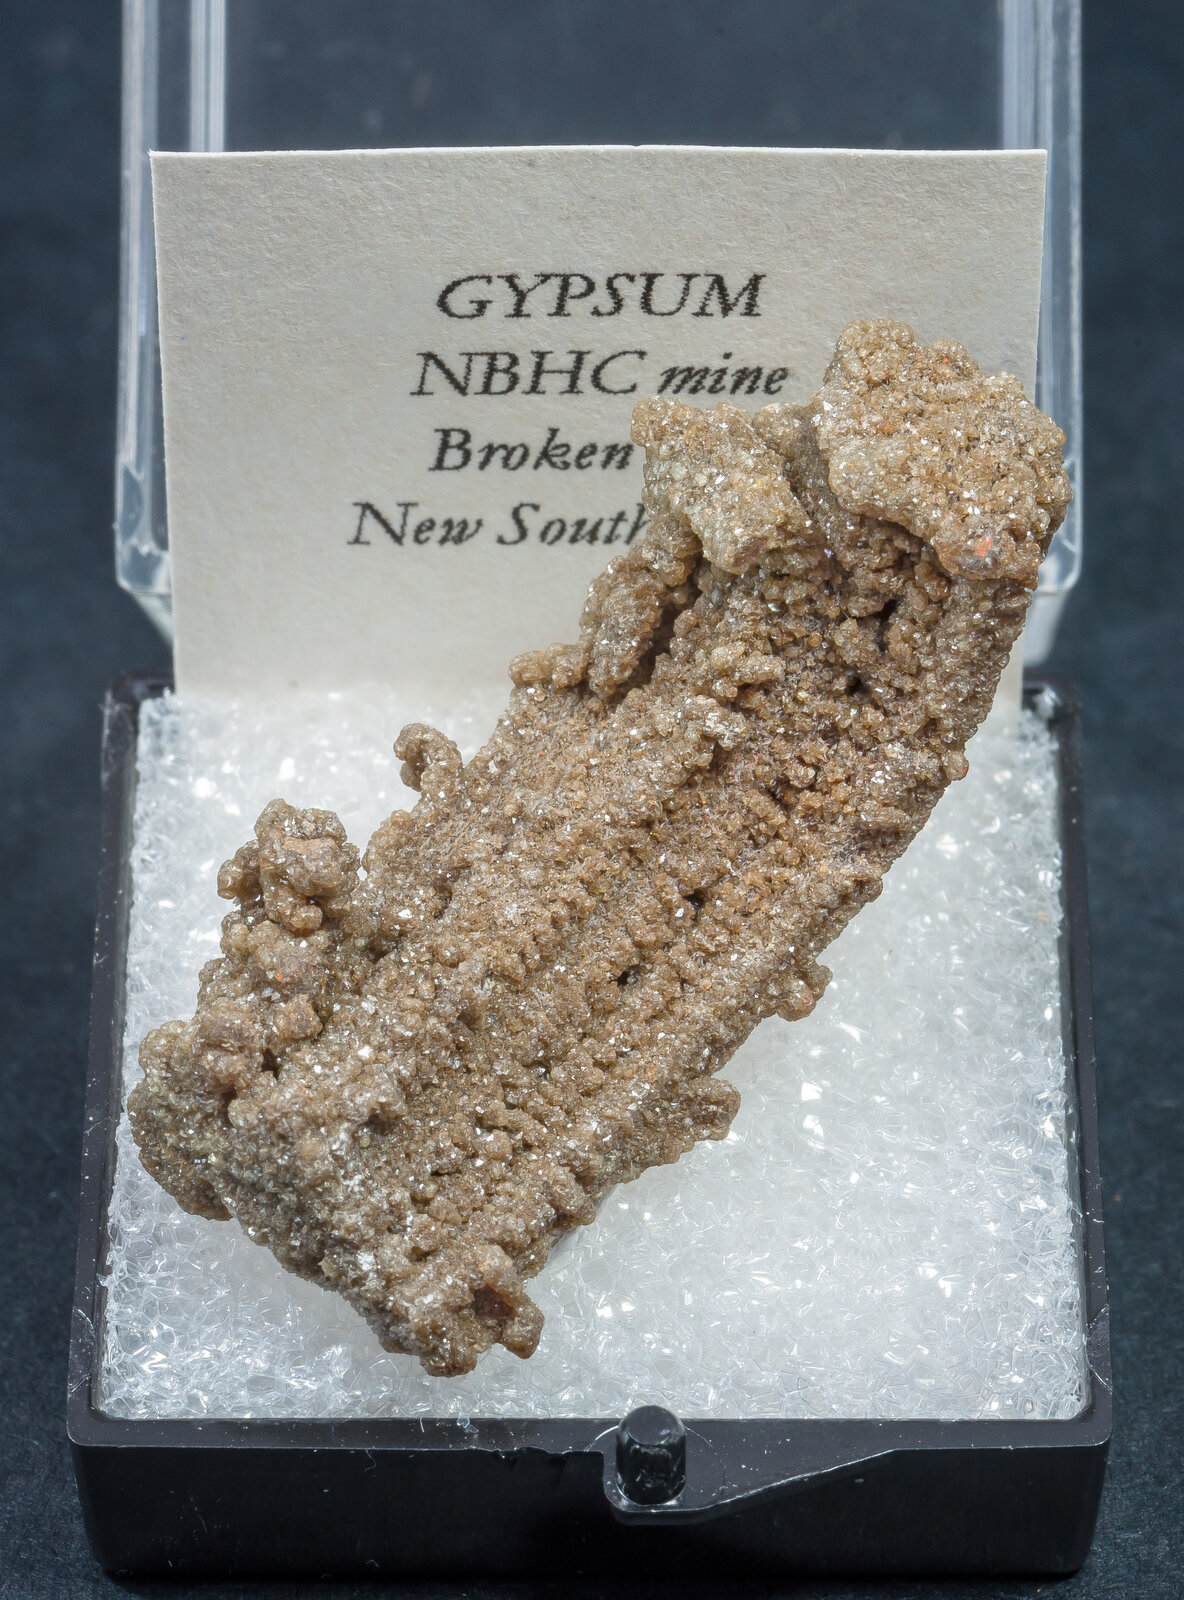 specimens/s_imagesAN2/Gypsum-TW14AN2f1.jpg